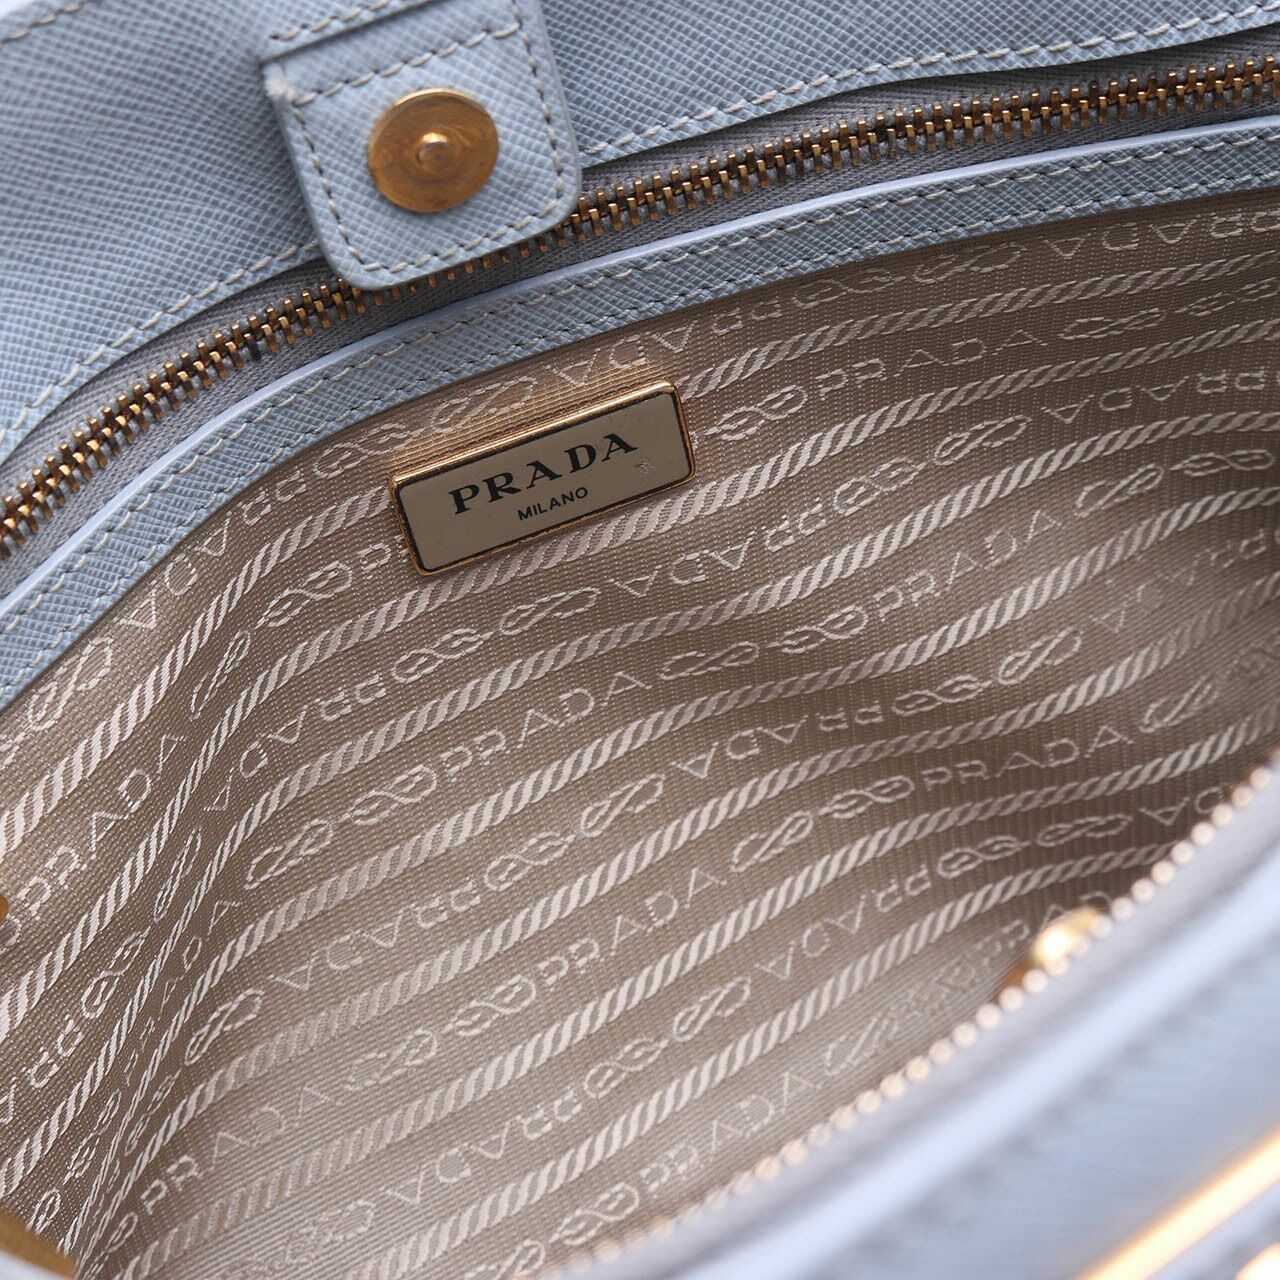 Prada Pale Blue Saffiano Lux Leather Satchel Bag